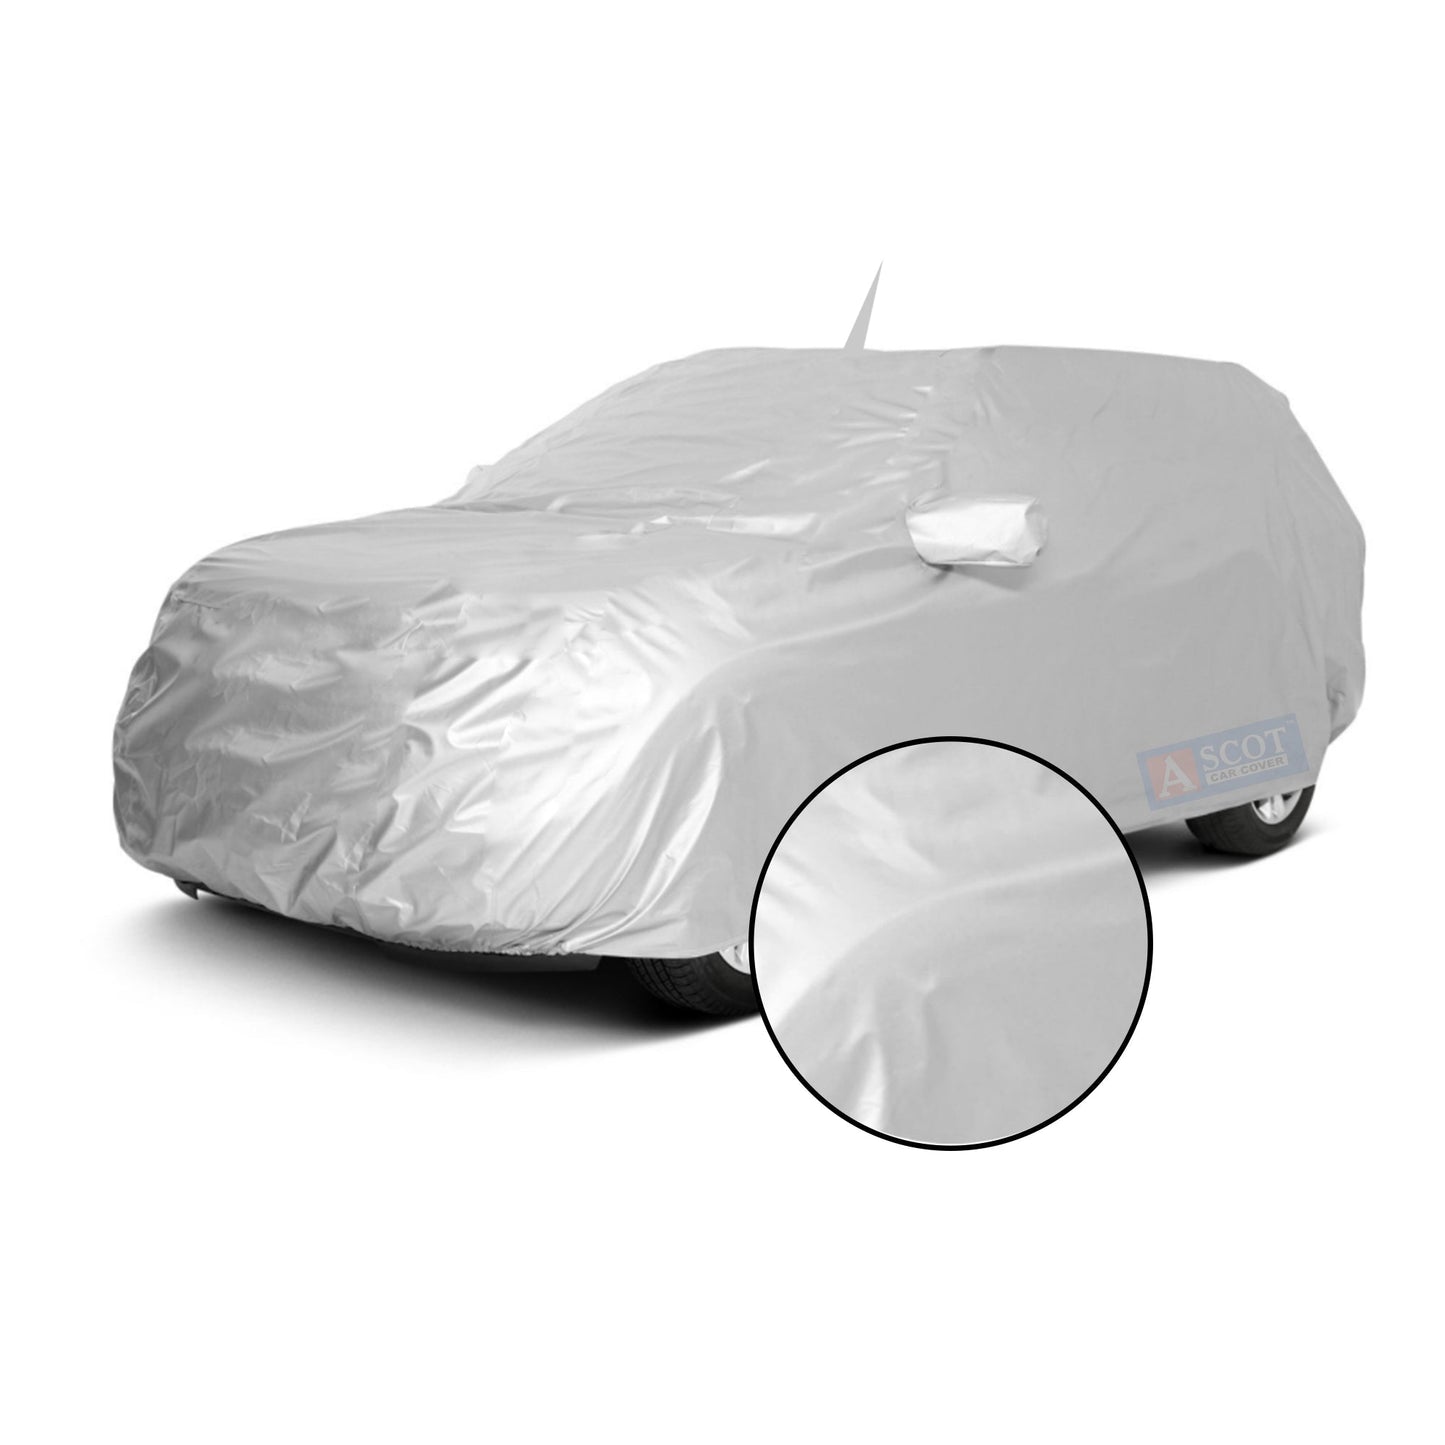 Ascot Skoda Octavia 2012-2019 Model Car Body Cover Dust Proof, Trippel Stitched